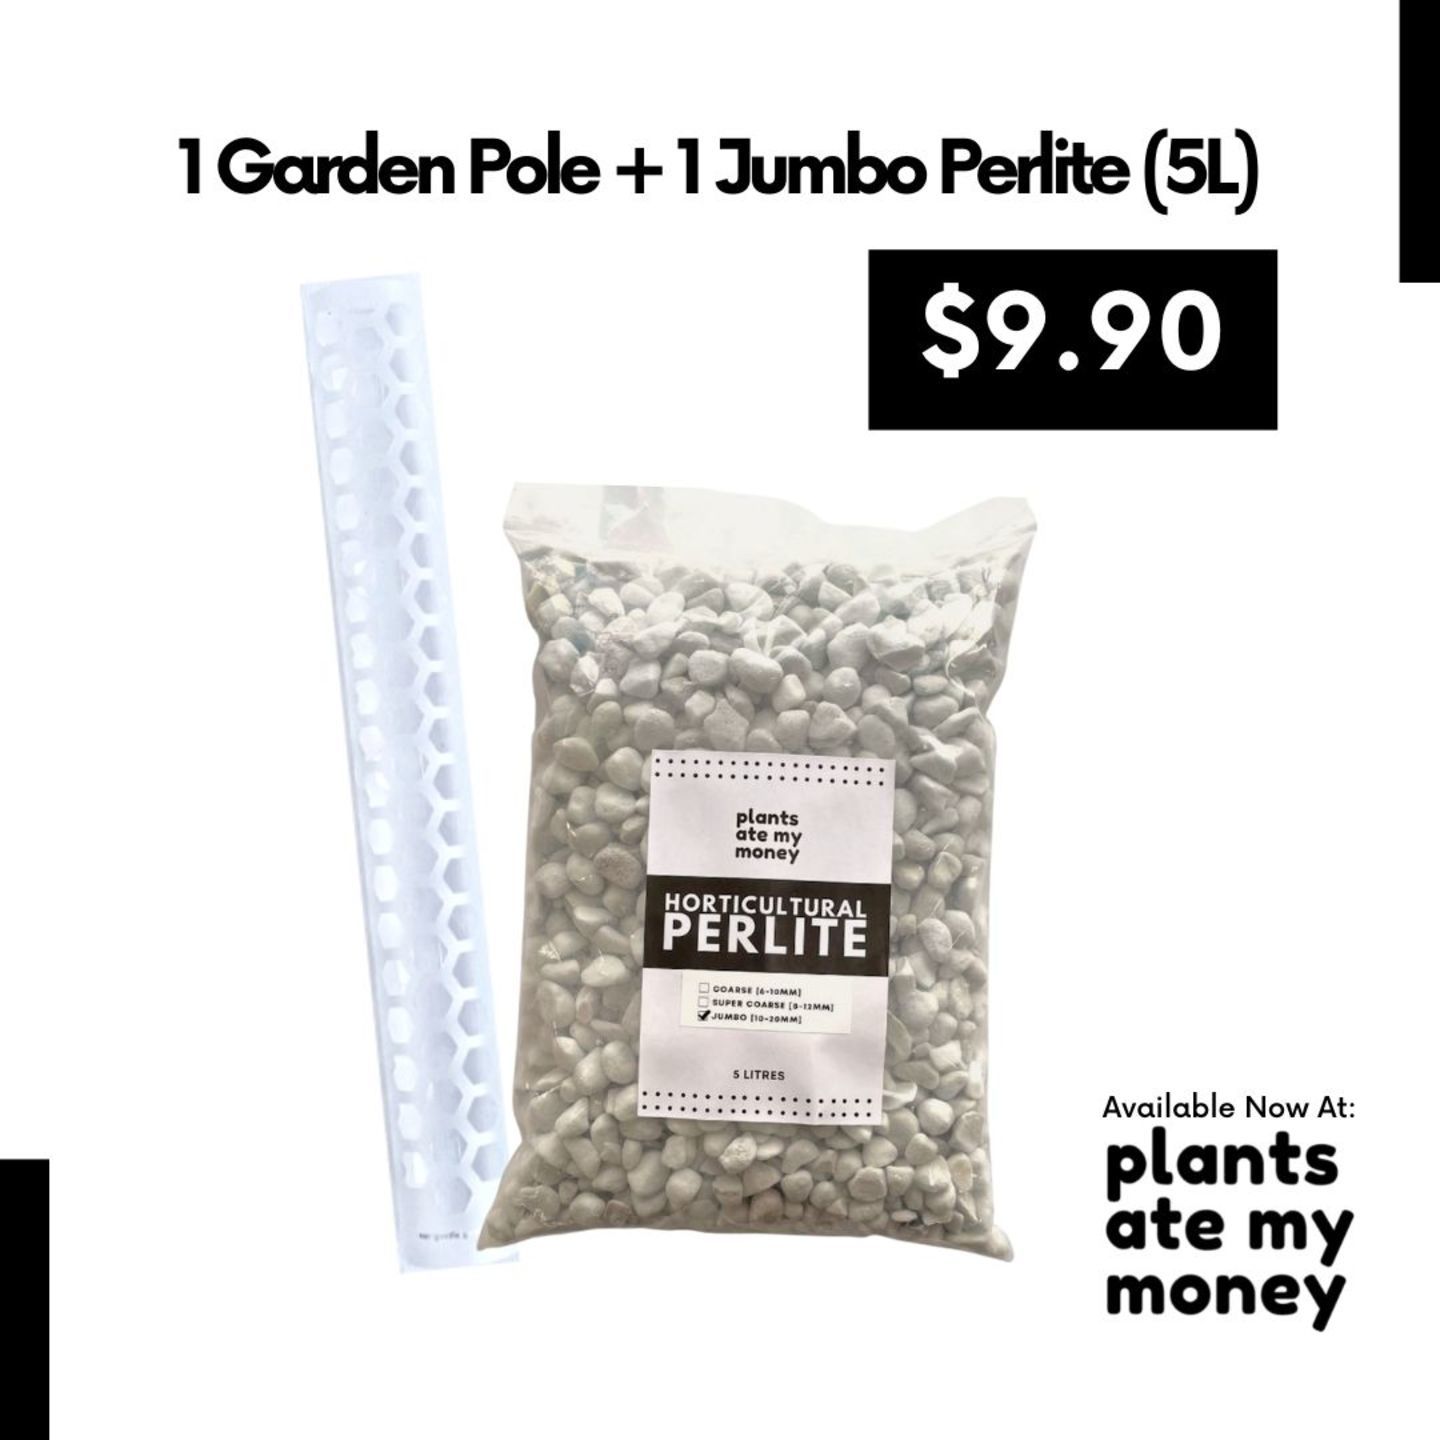 1 Garden Pole + 1 Jumbo Perlite 5L